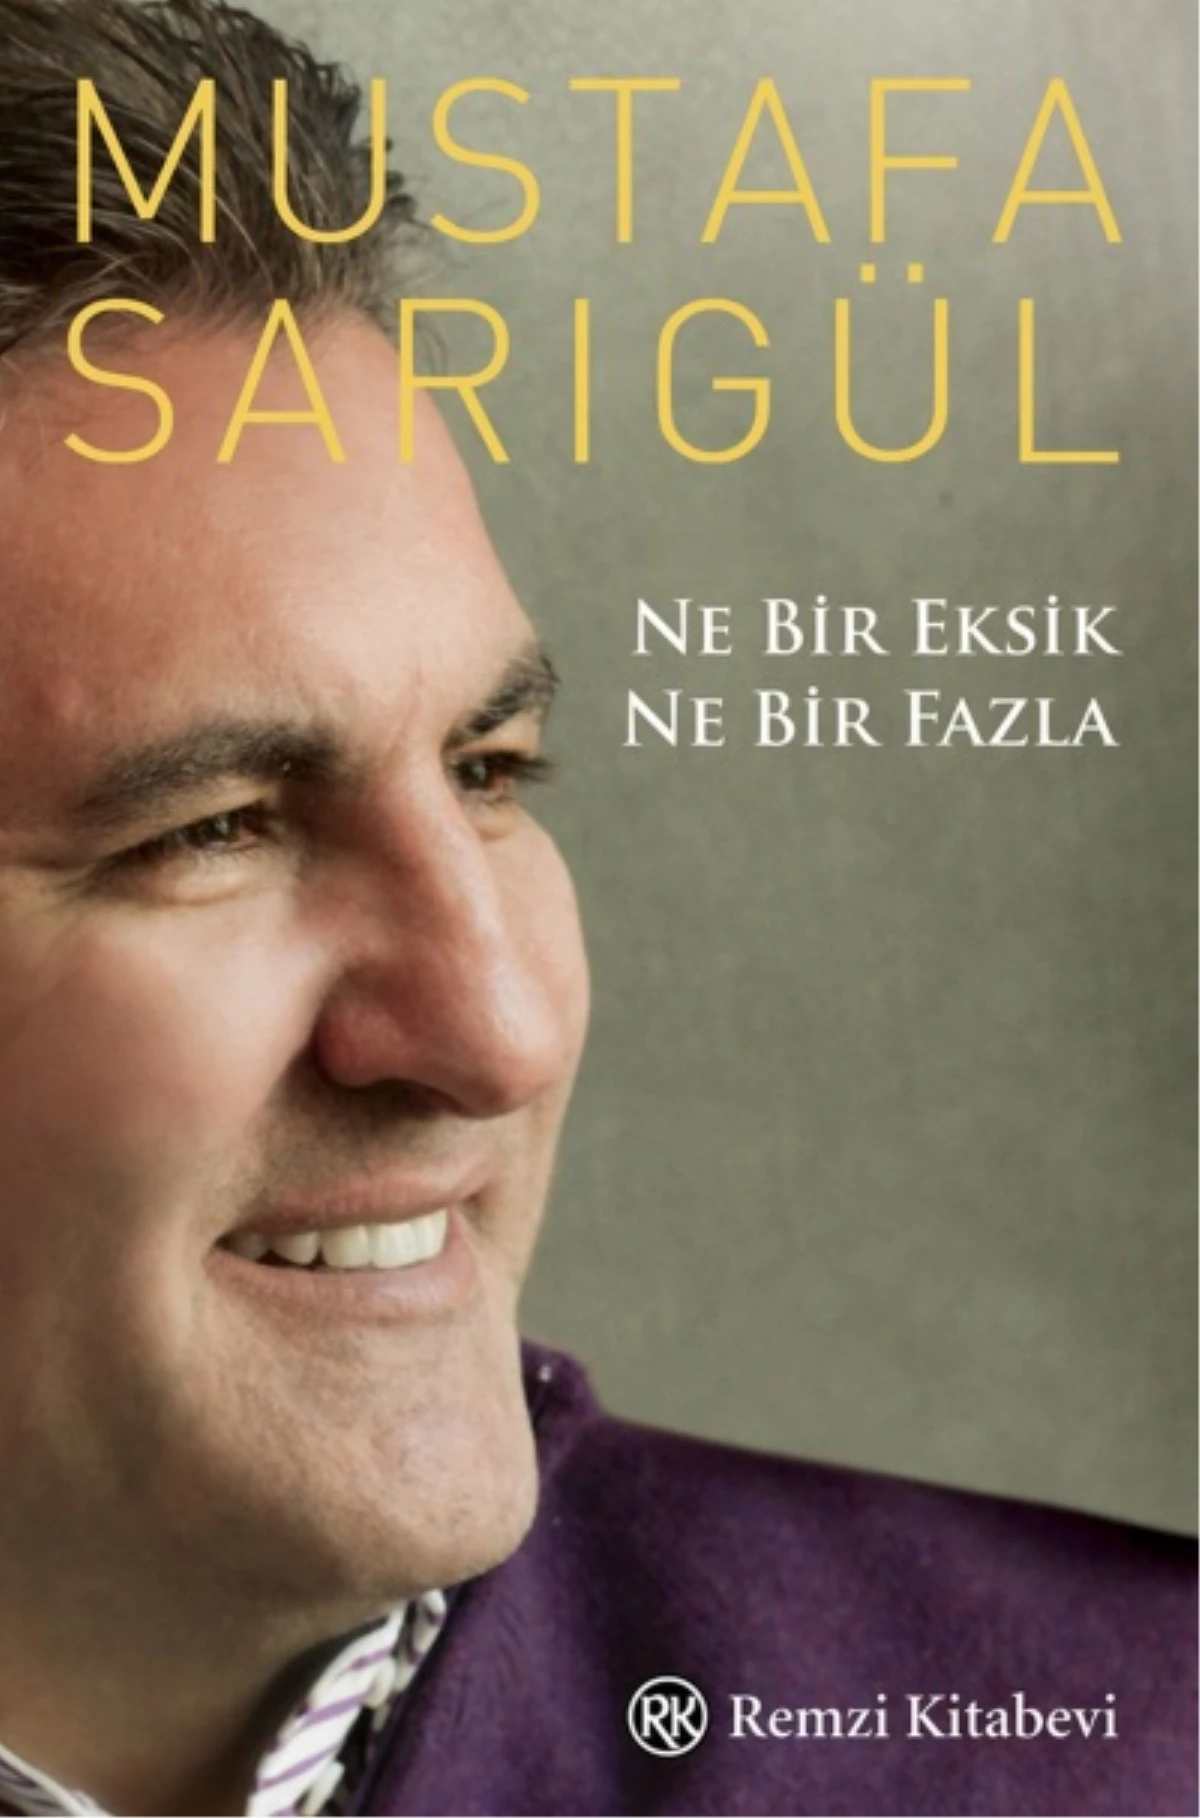 Mustafa Sarıgül 2 Saatte 2.000 Kitap İmzaladı